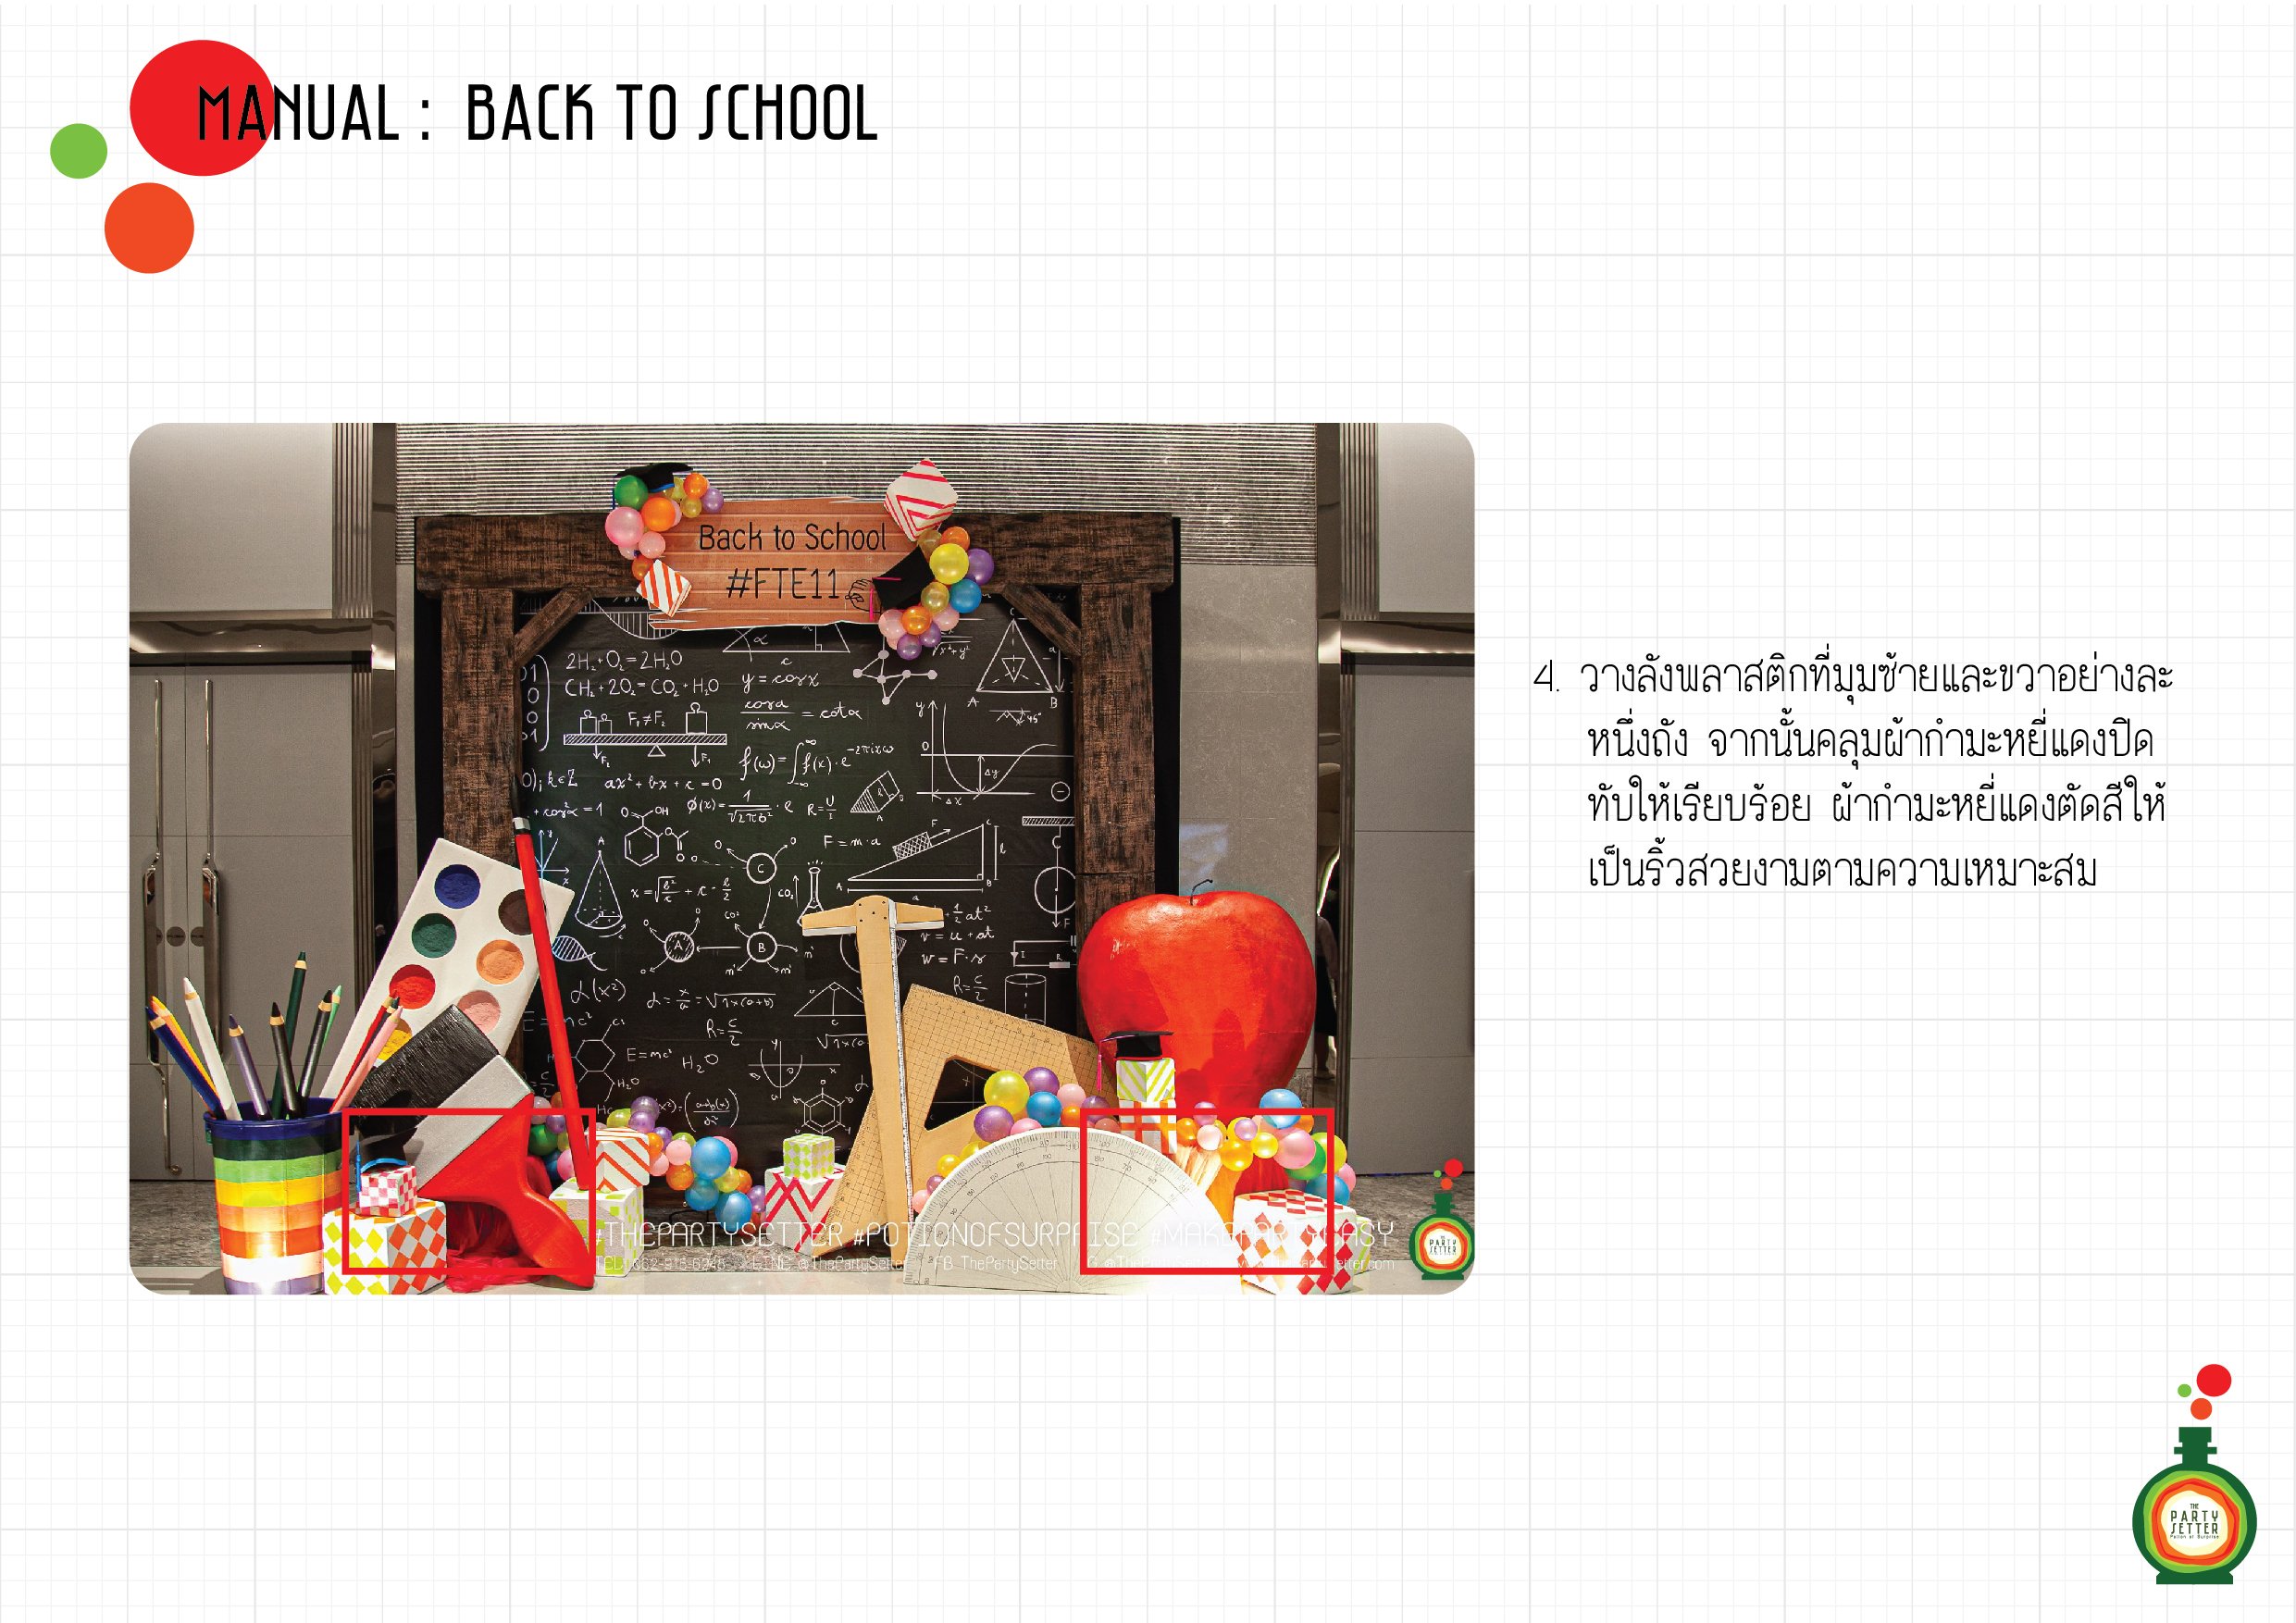 Manual_Back to School-2-04-01.jpg